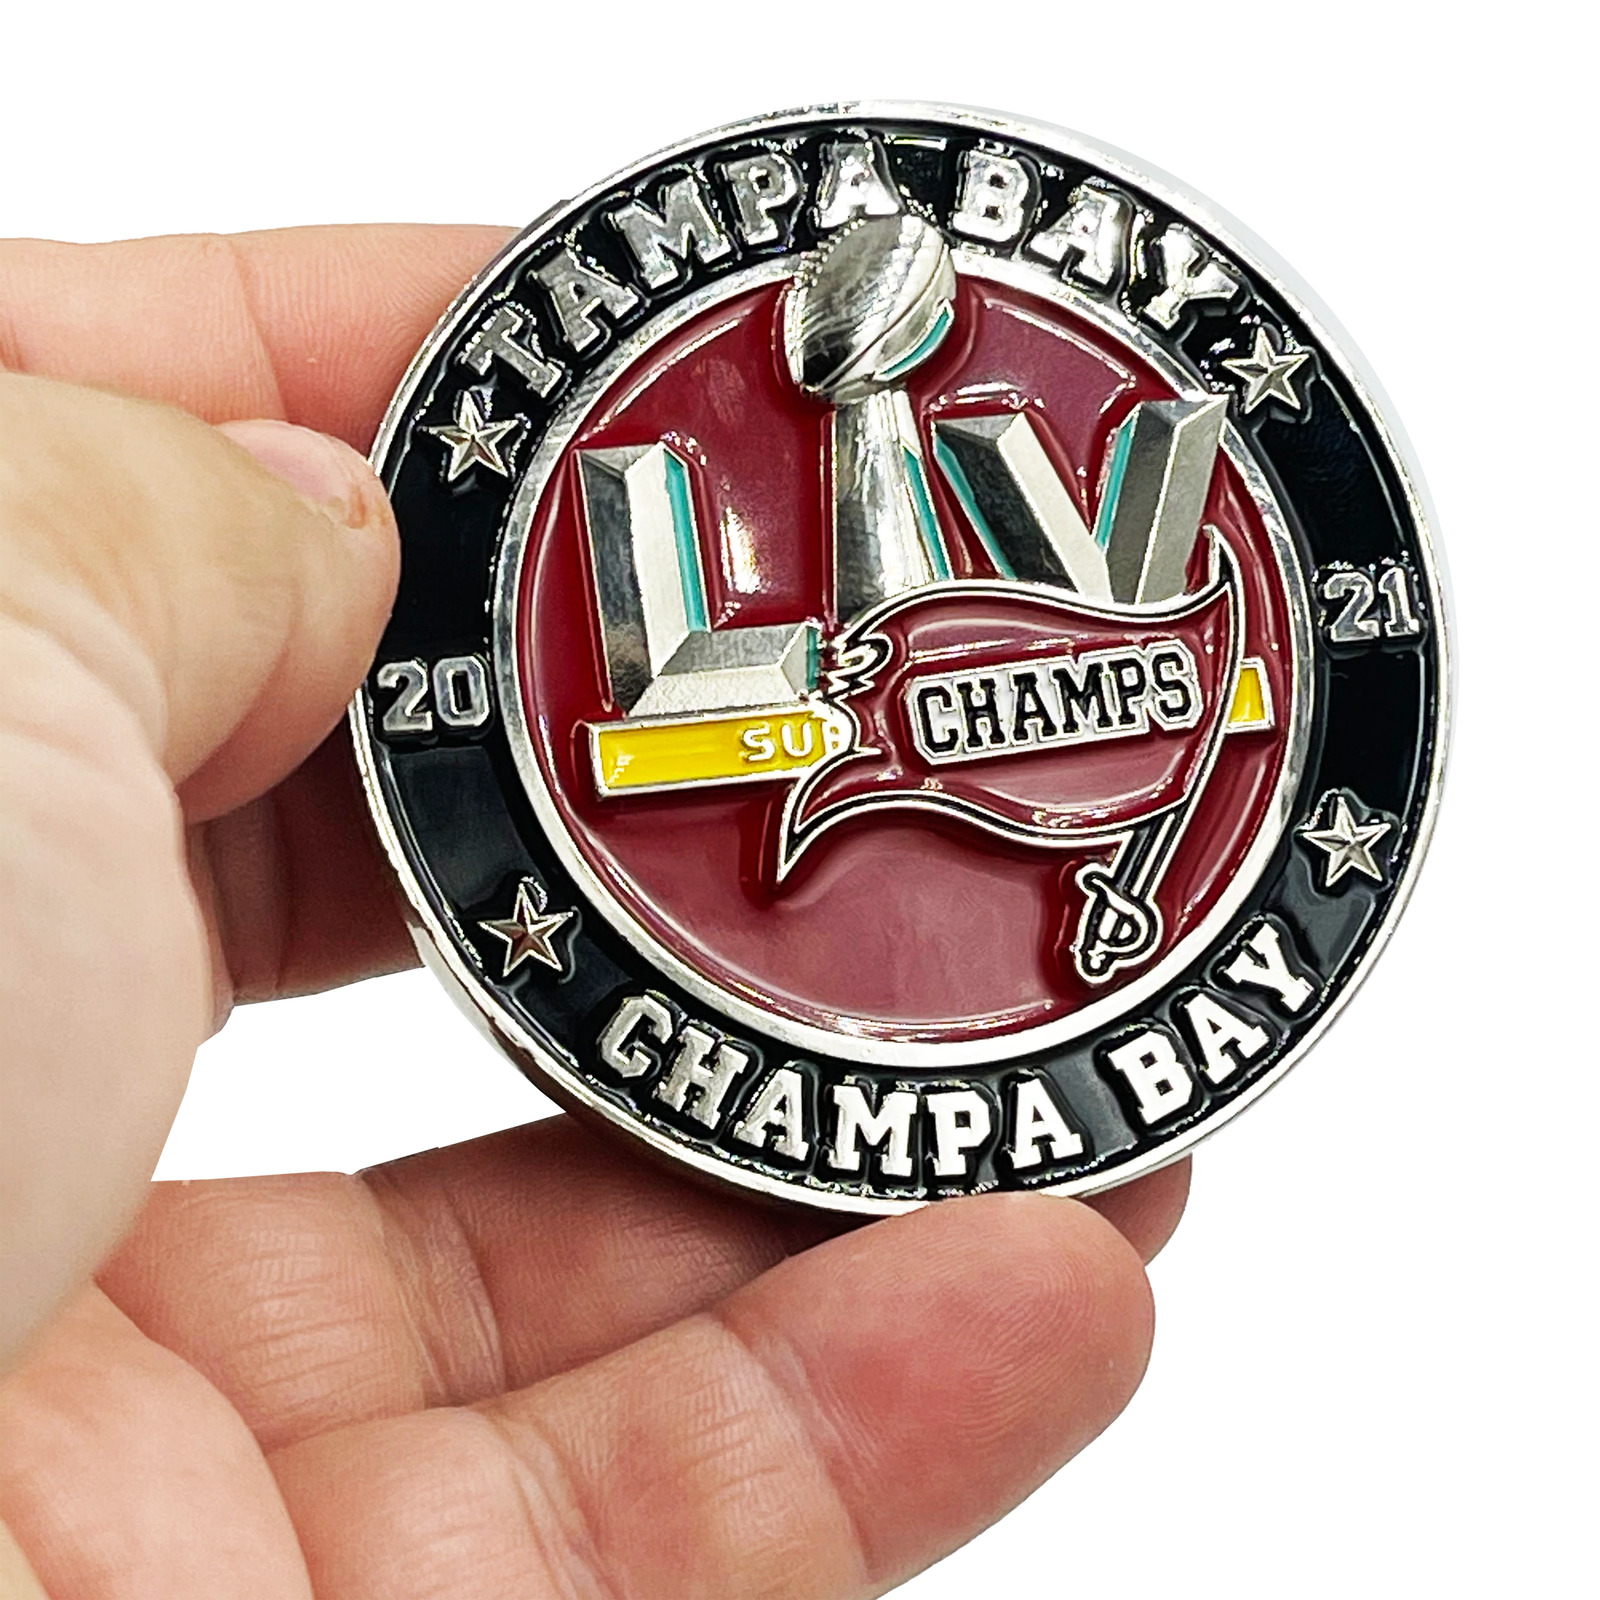 discontinued BL7-005 Tompa Bay LFG Champa Bay LIV Champs Brady GOAT challenge co